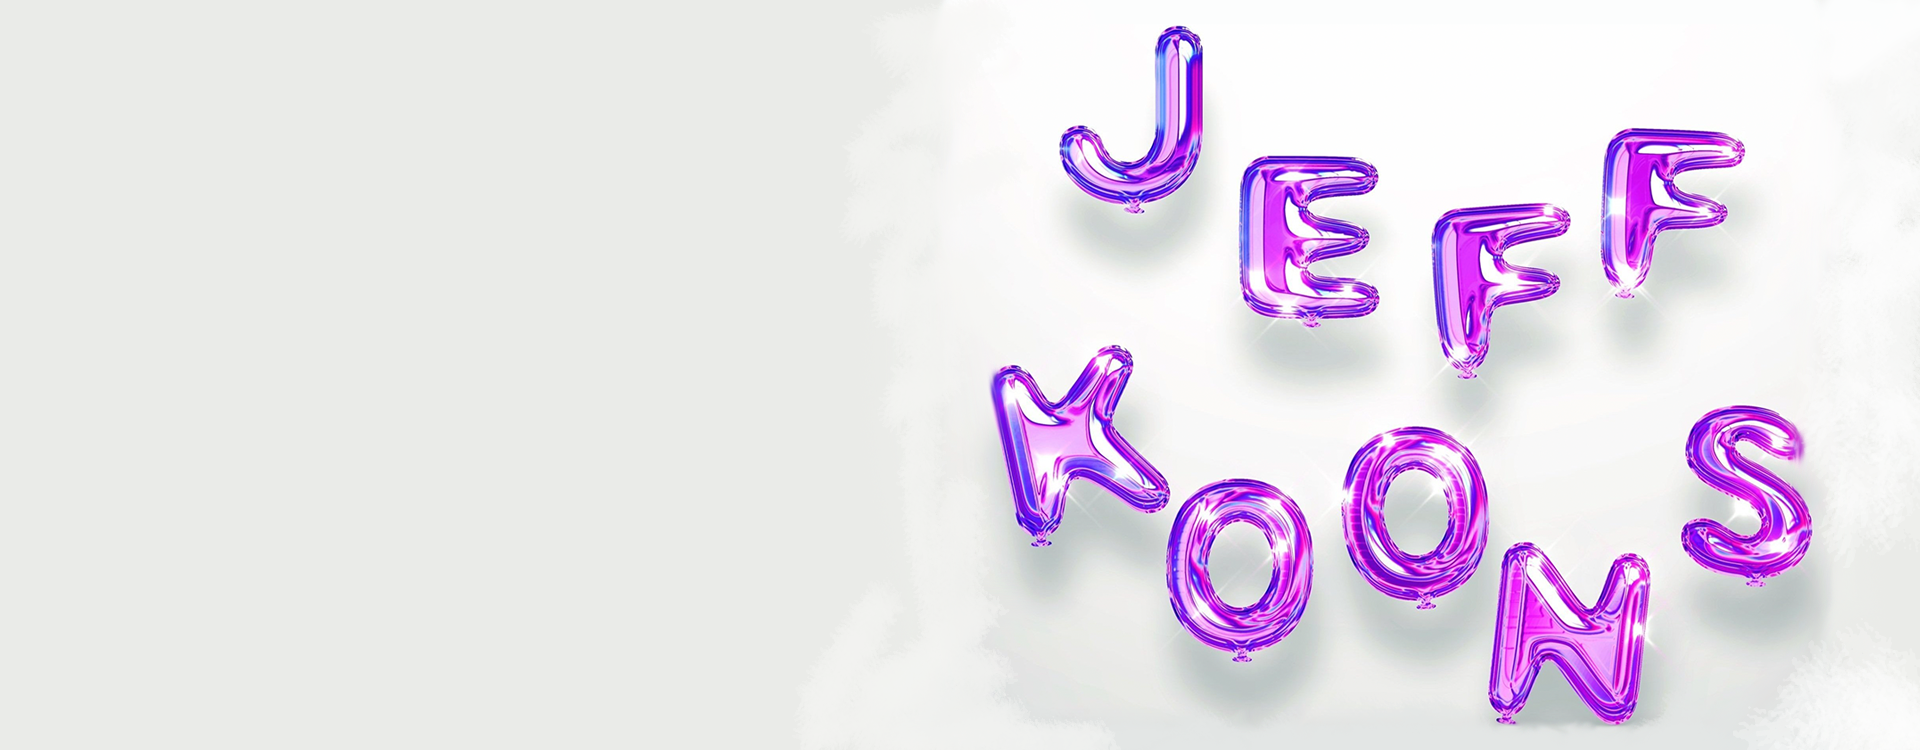 Jeff Koons: A Private Portrait